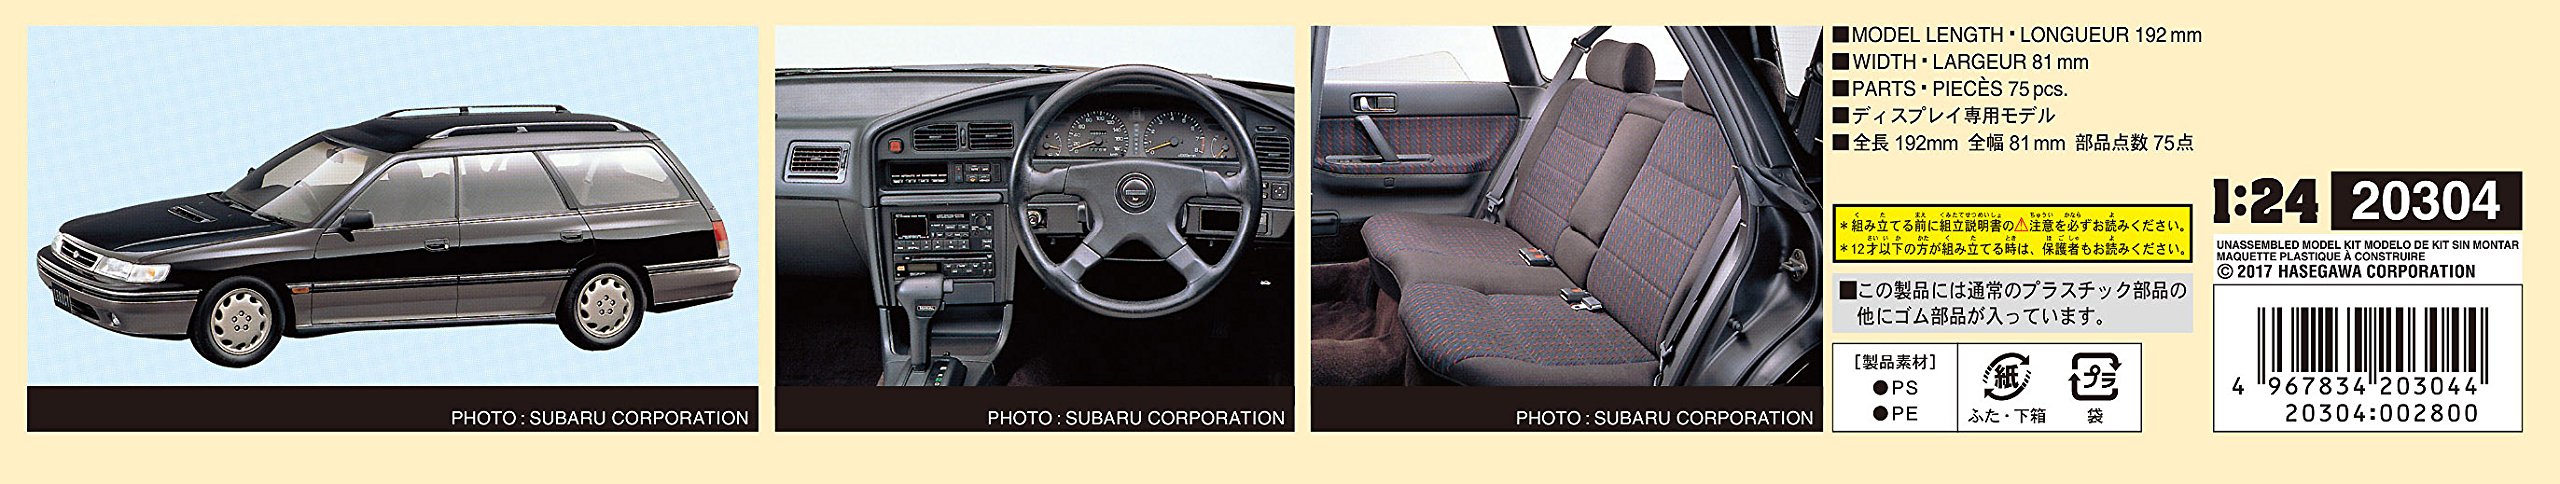 HASEGAWA 20304 Subaru Legacy Gt Touring Wagon Kit échelle 1/24